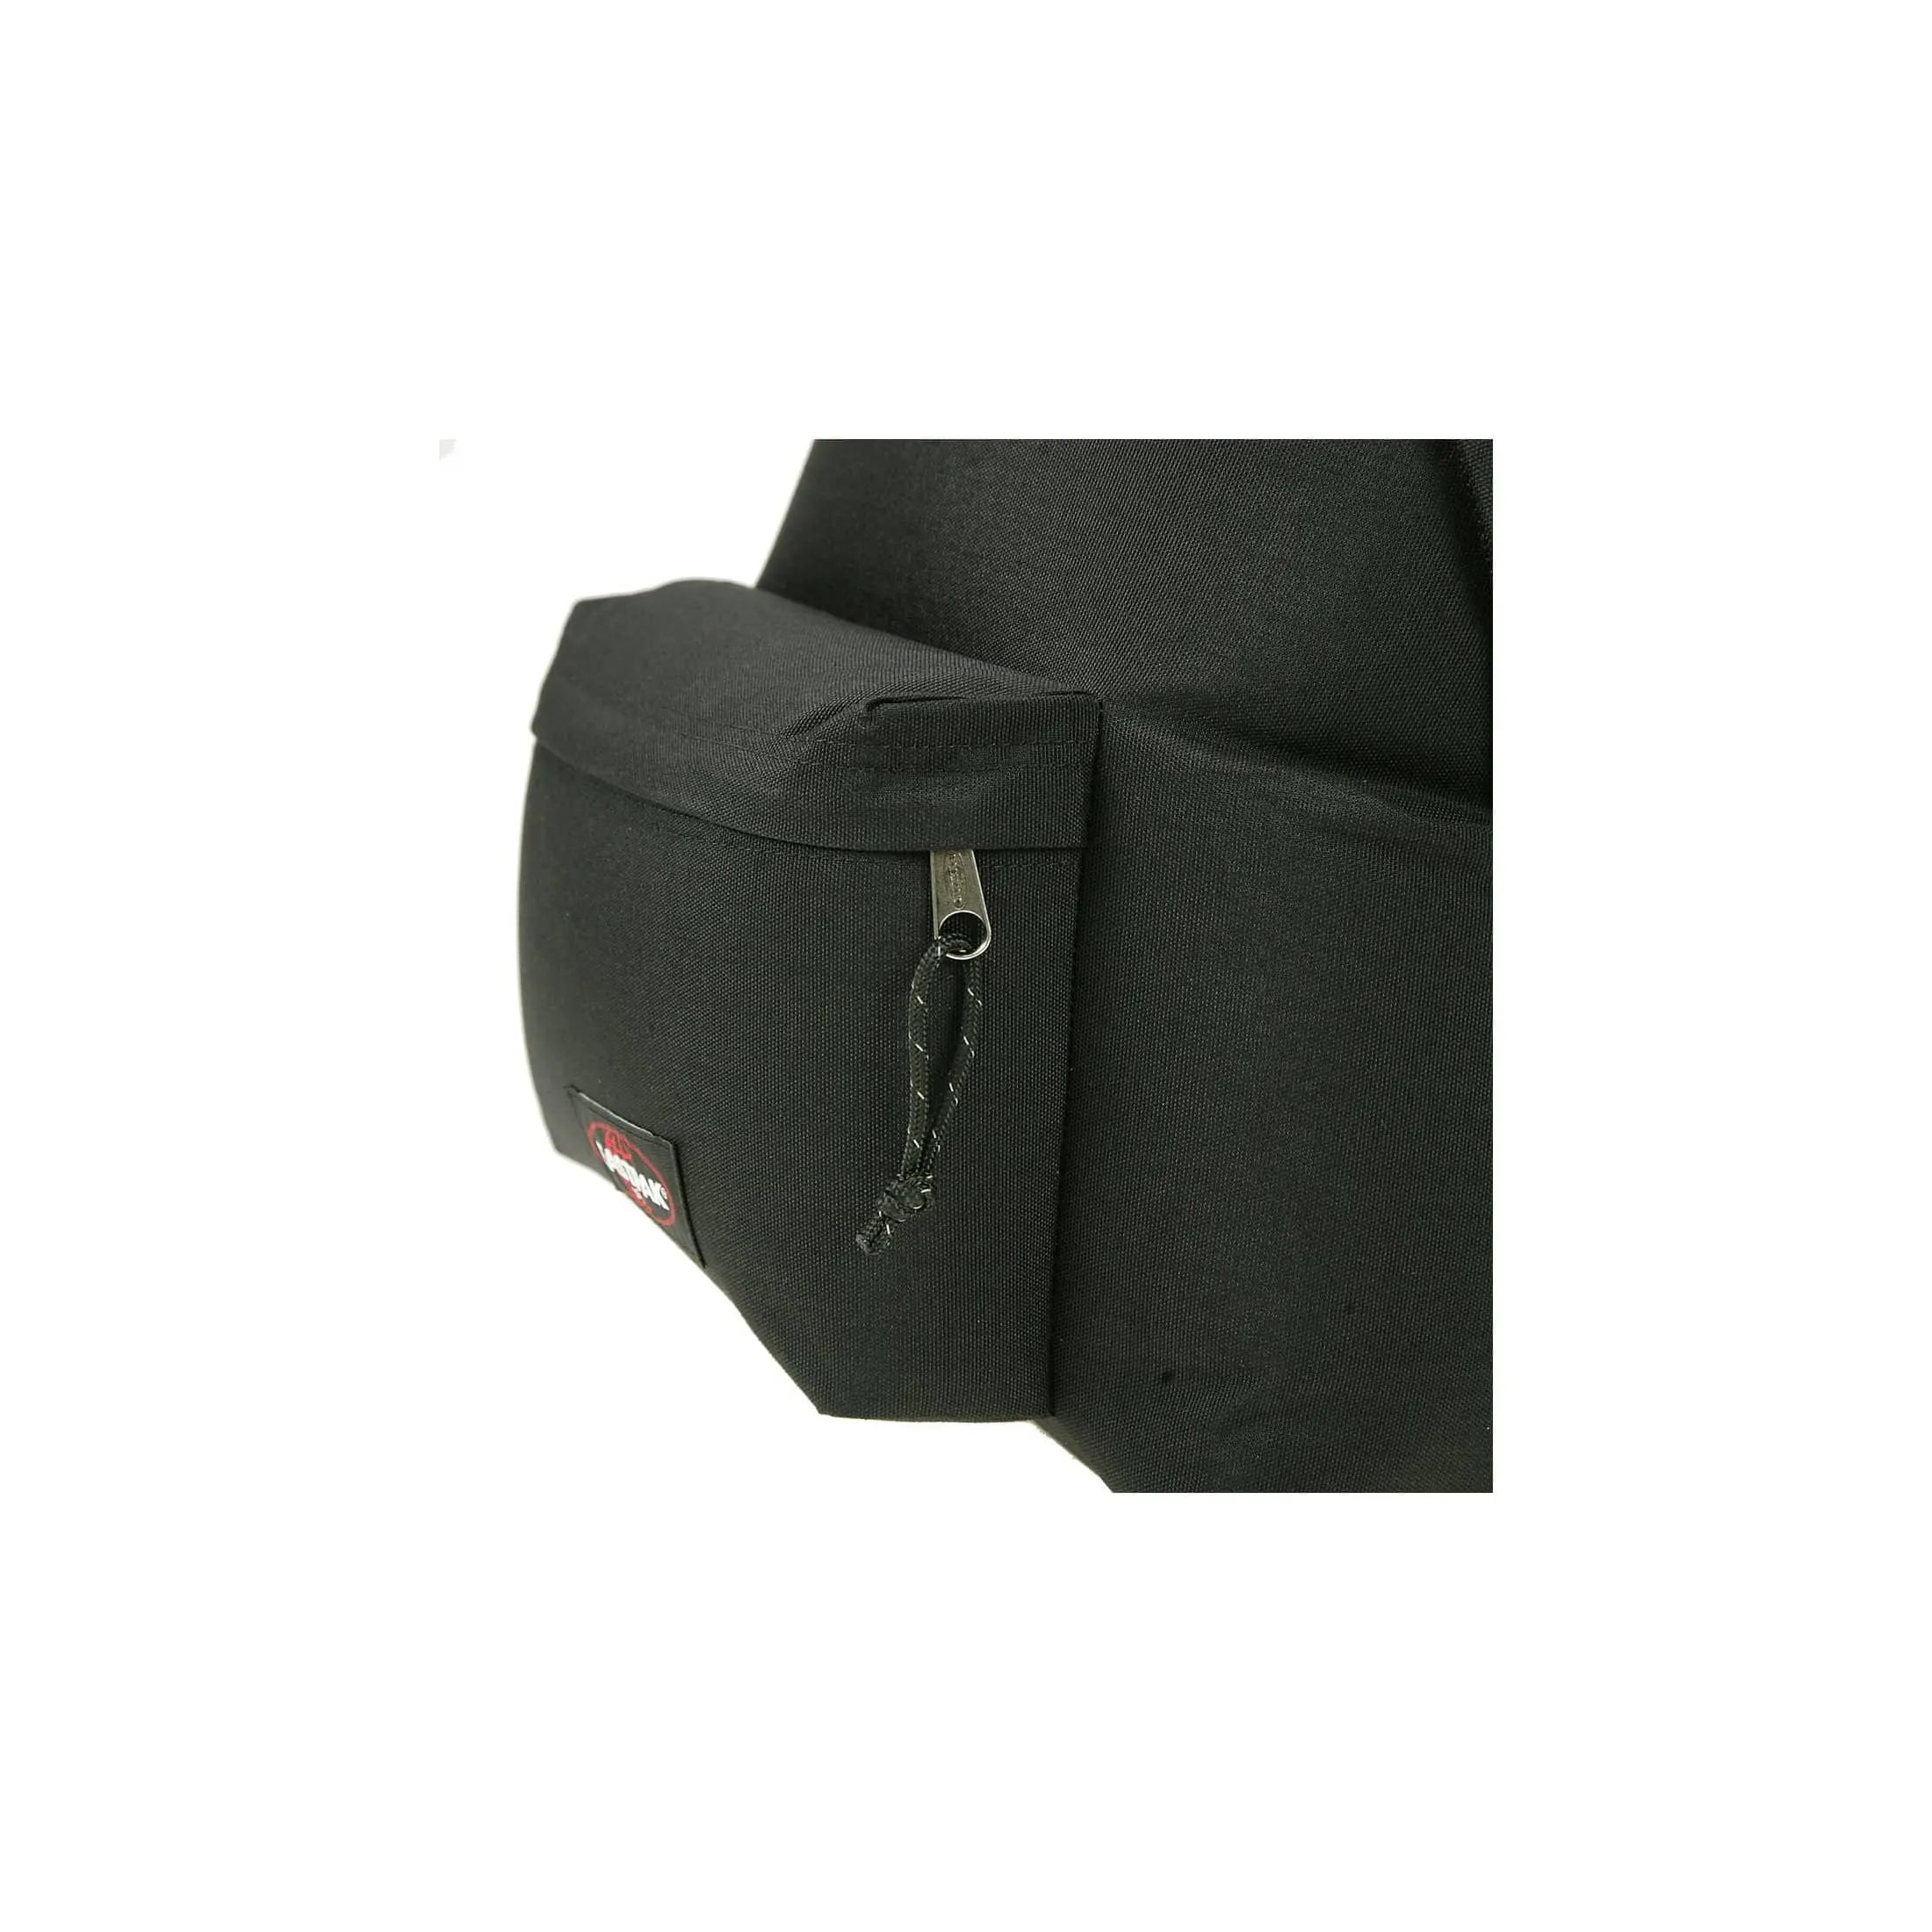 Eastpak Authentic Padded Pak'r Freizeitrucksack 41 cm - Black Snap